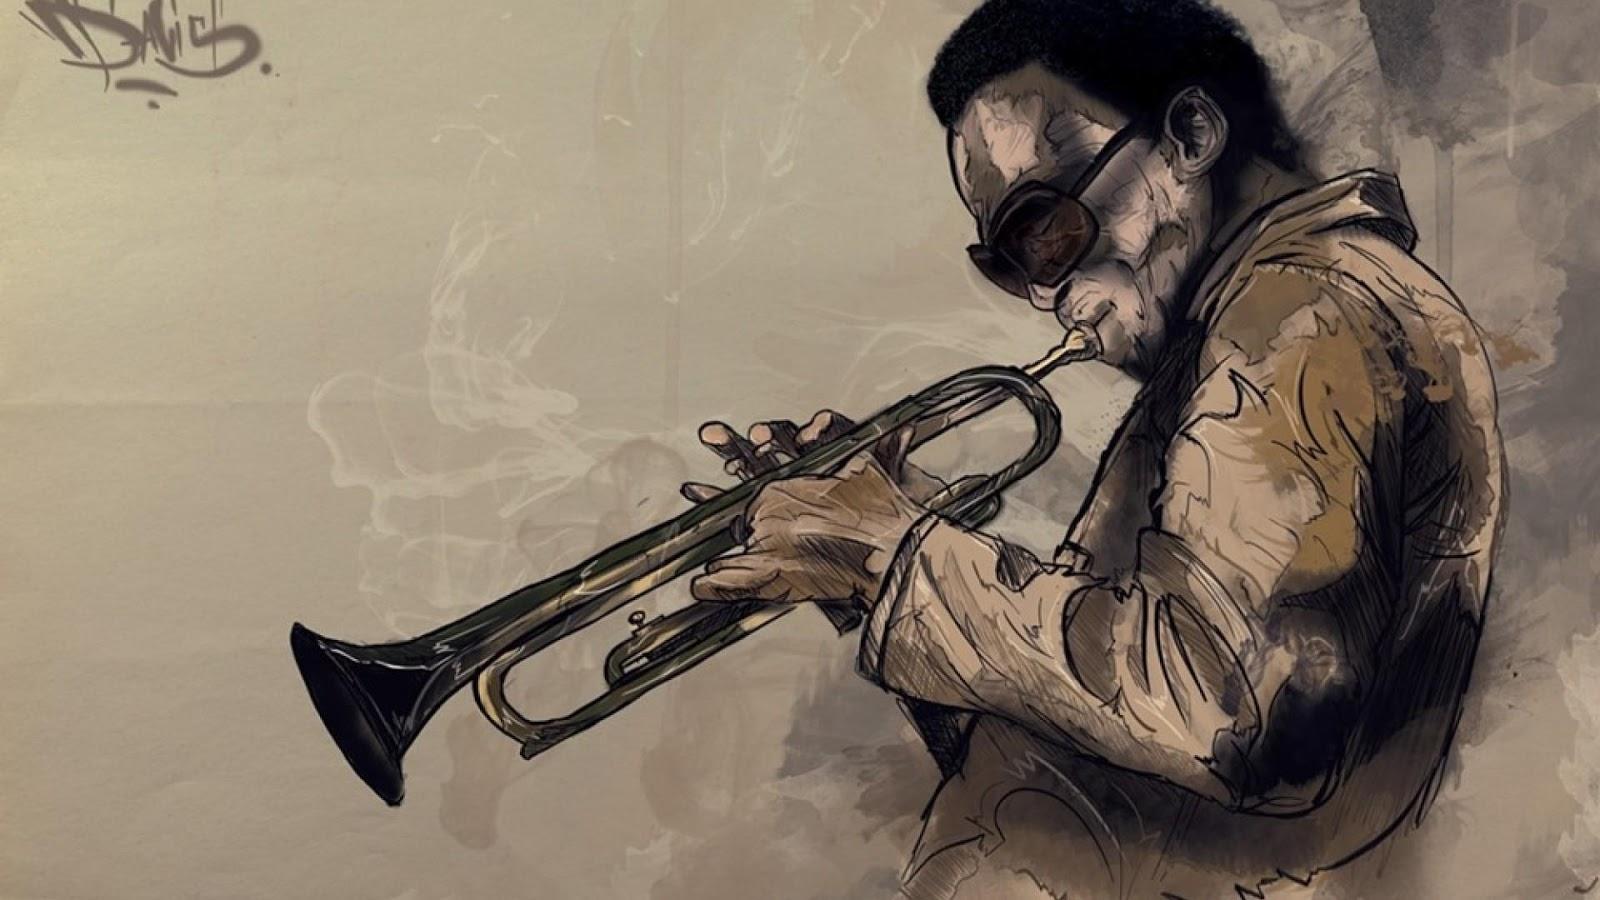 Jazz music wallpaper